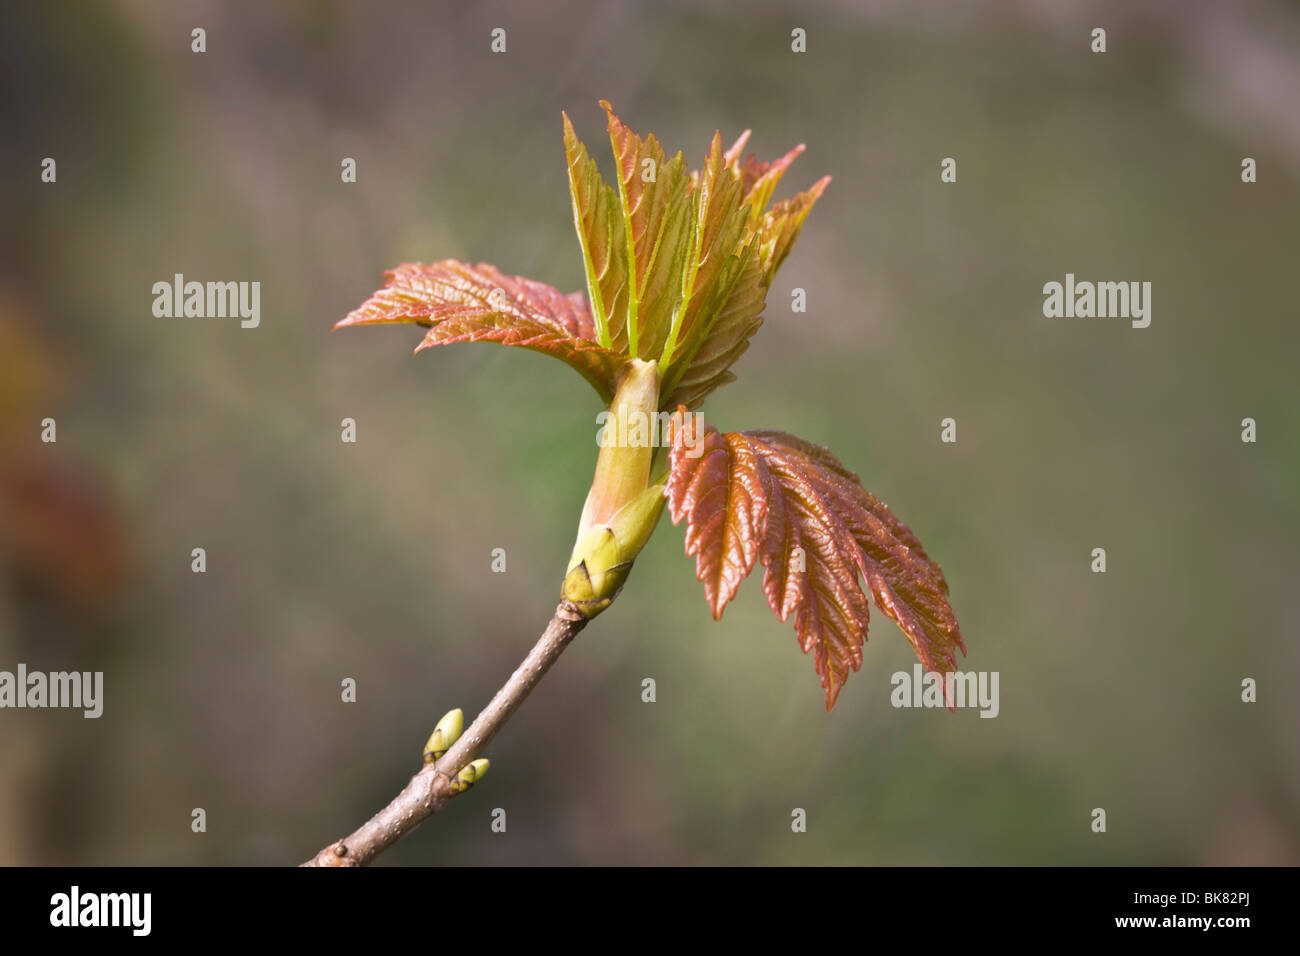 Sycamore tree bud bursting into new leaf Stock Photo